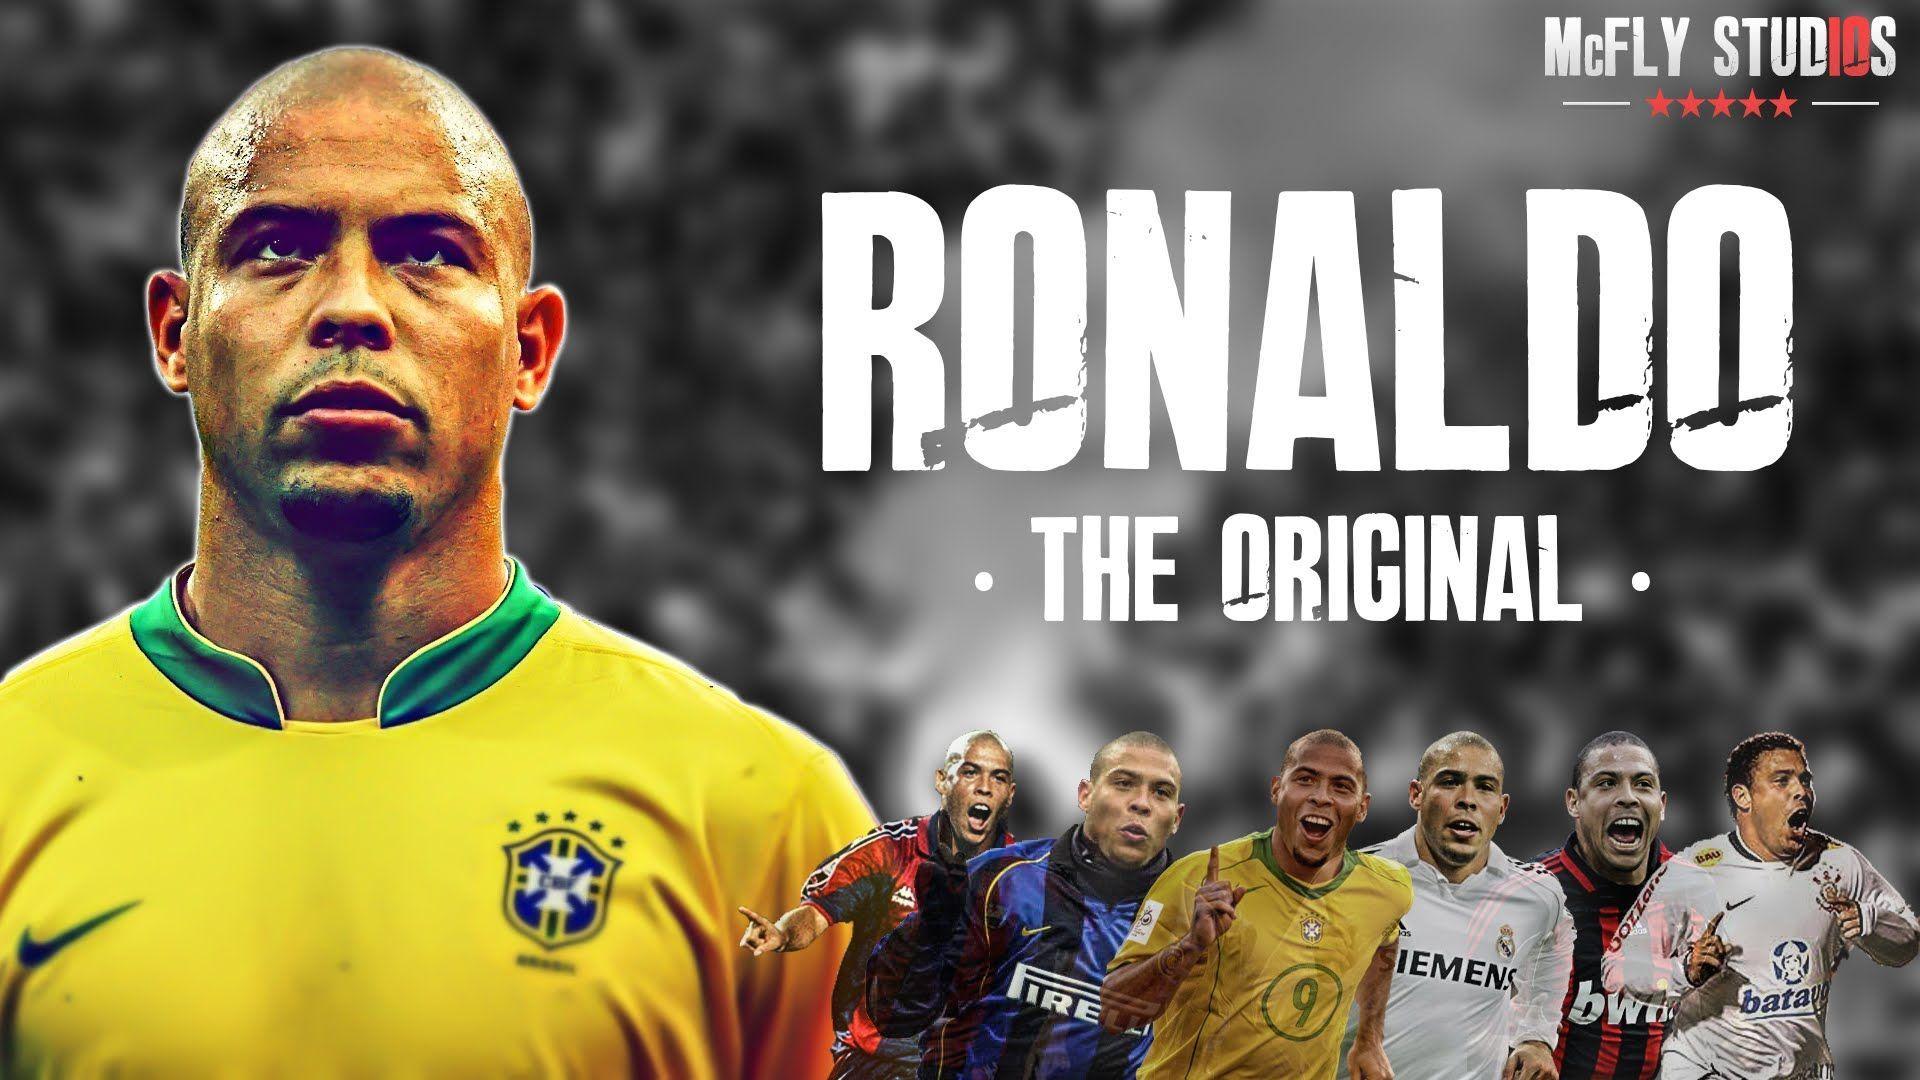 Ronaldo Nazário  Soccer  Sports Background Wallpapers on Desktop Nexus  Image 2626246